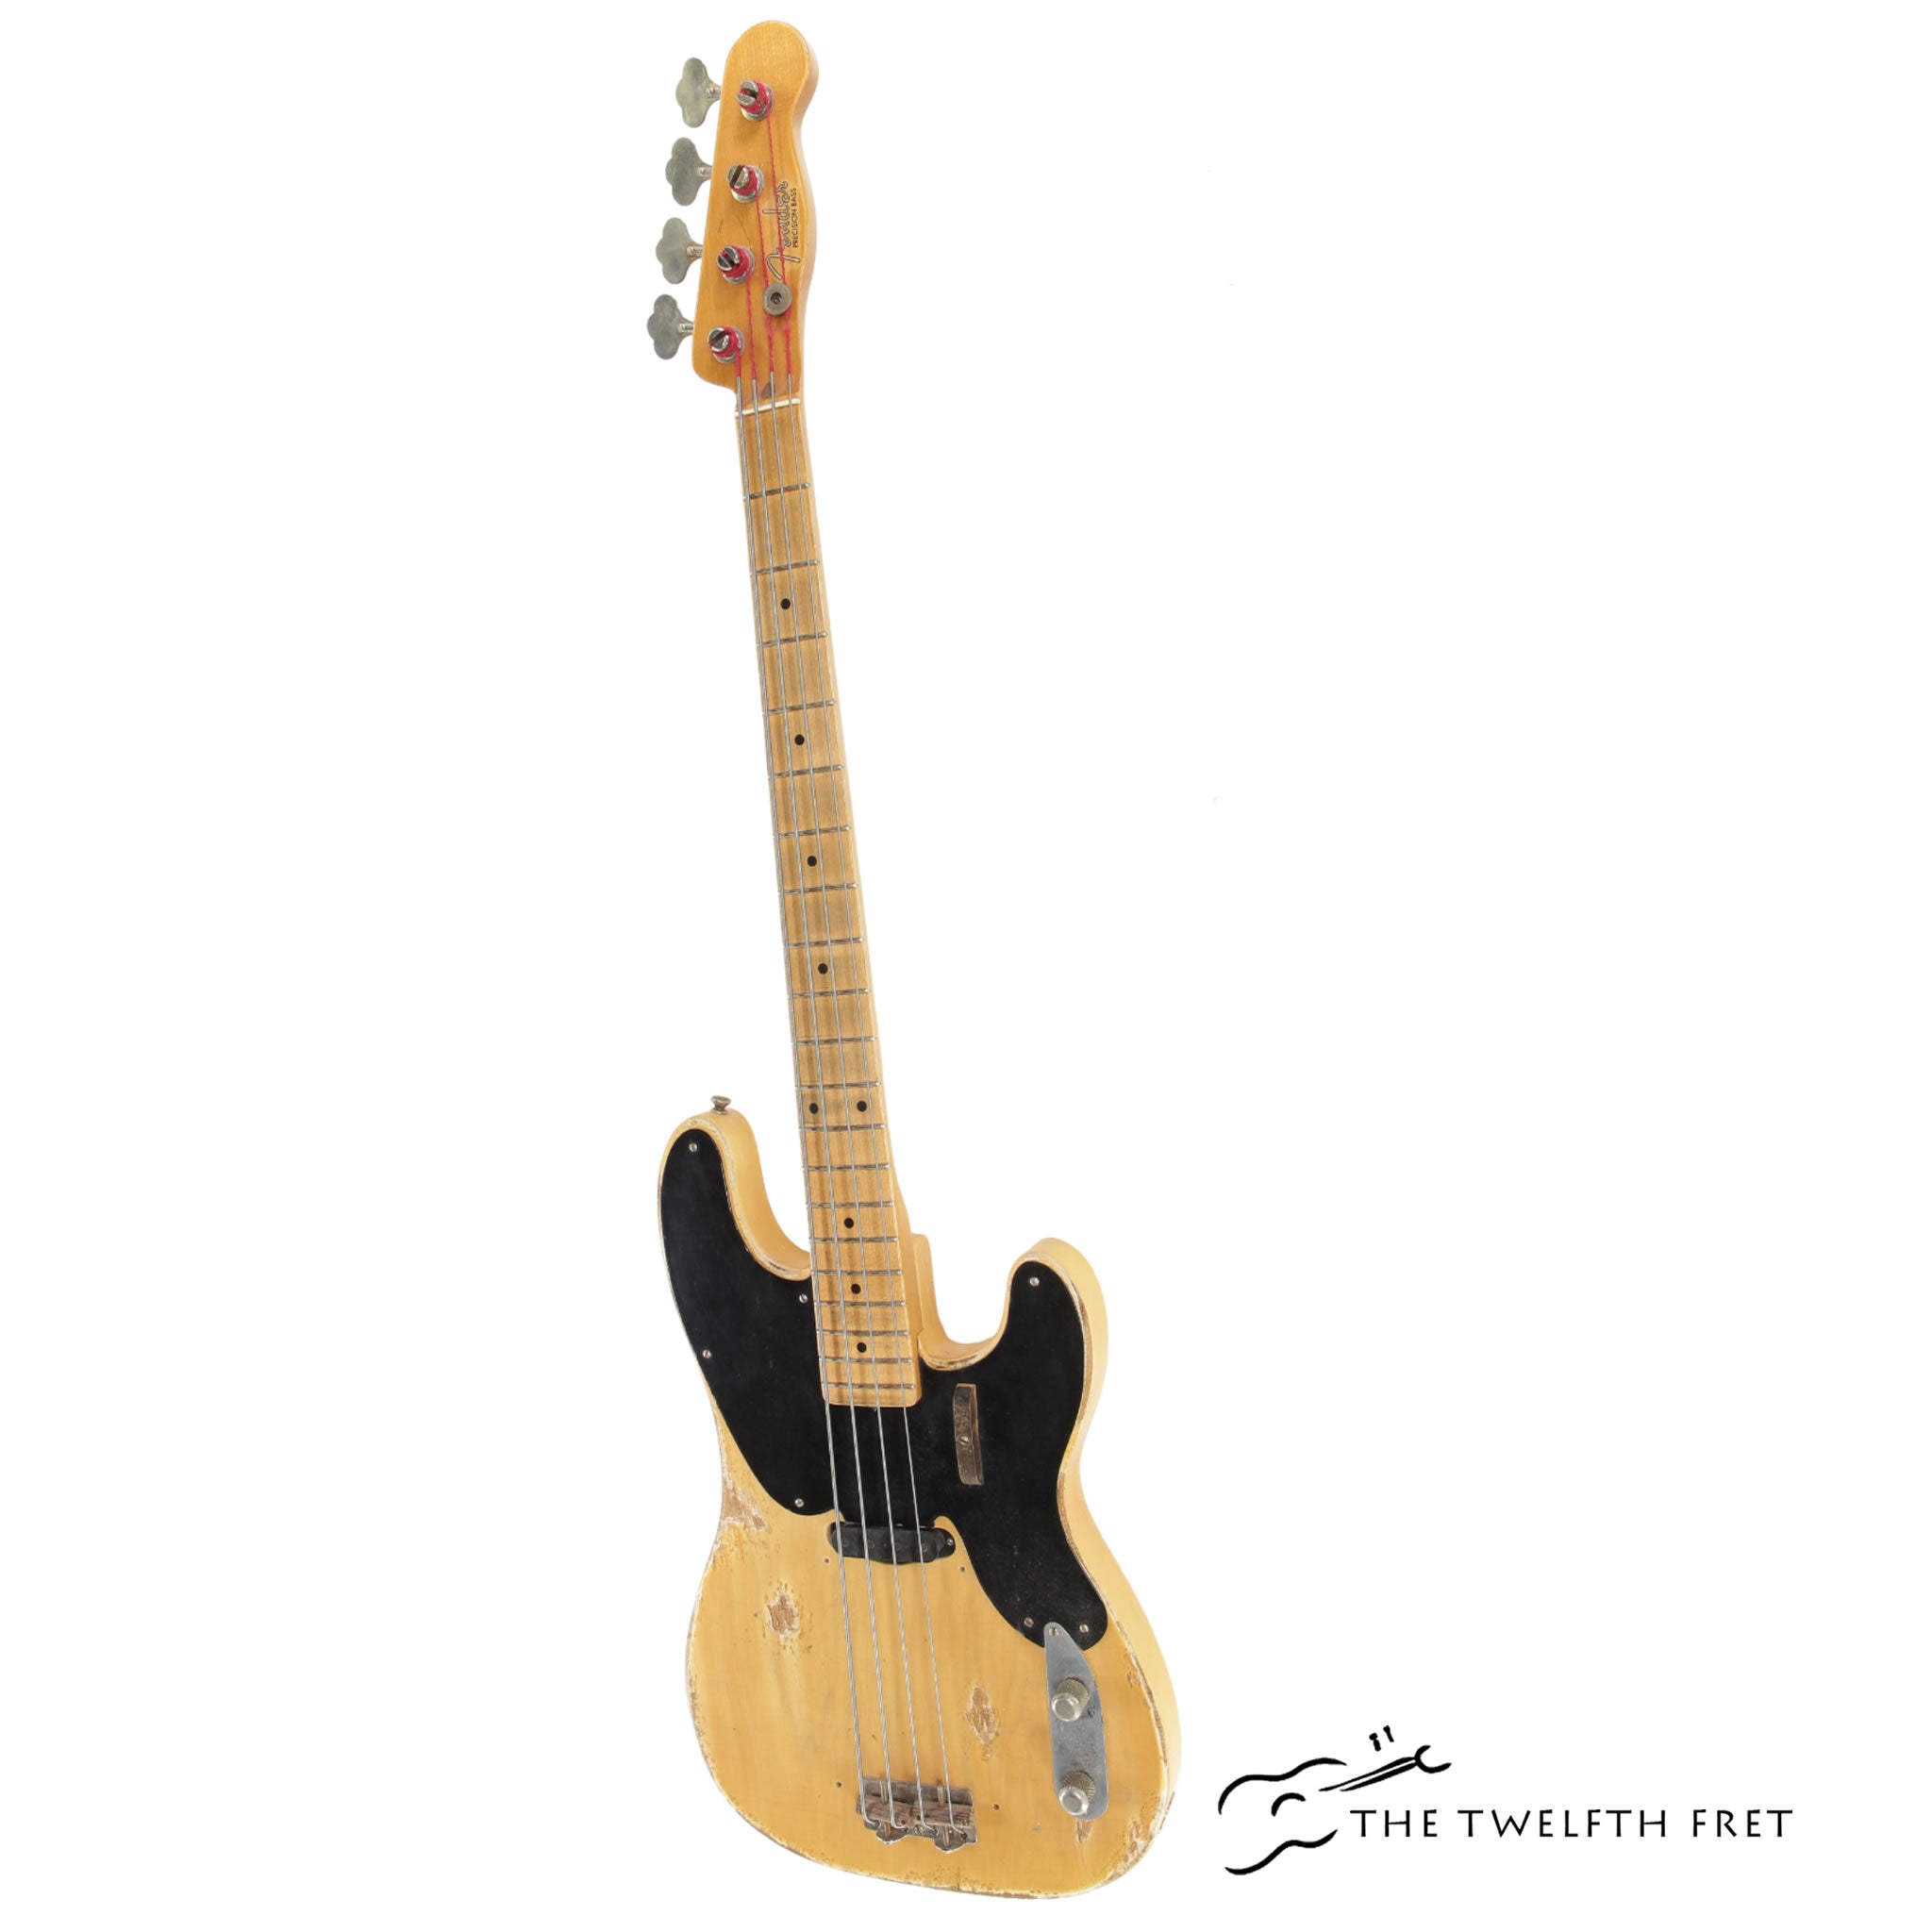 Fender Vintage Custom 1951 Precision Bass Relic NoCaster Blonde, 2019  - The Twelfth Fret